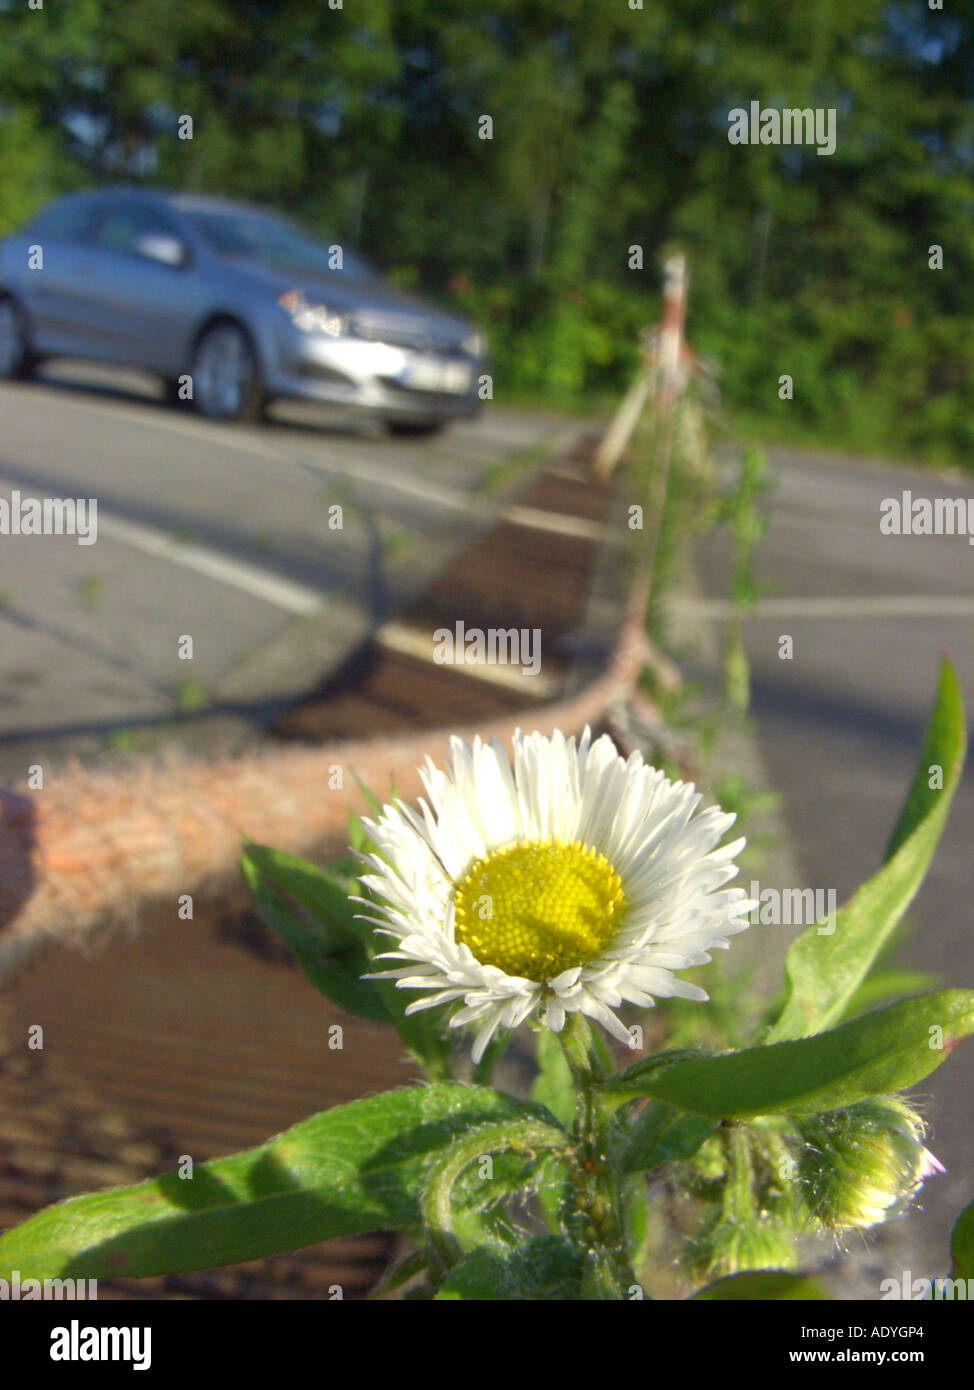 annual fleabane, daisy fleabane, sweet scabious, Eastern daisy fleabane, white-top fleabane (Erigeron annuus), blooming plant o Stock Photo